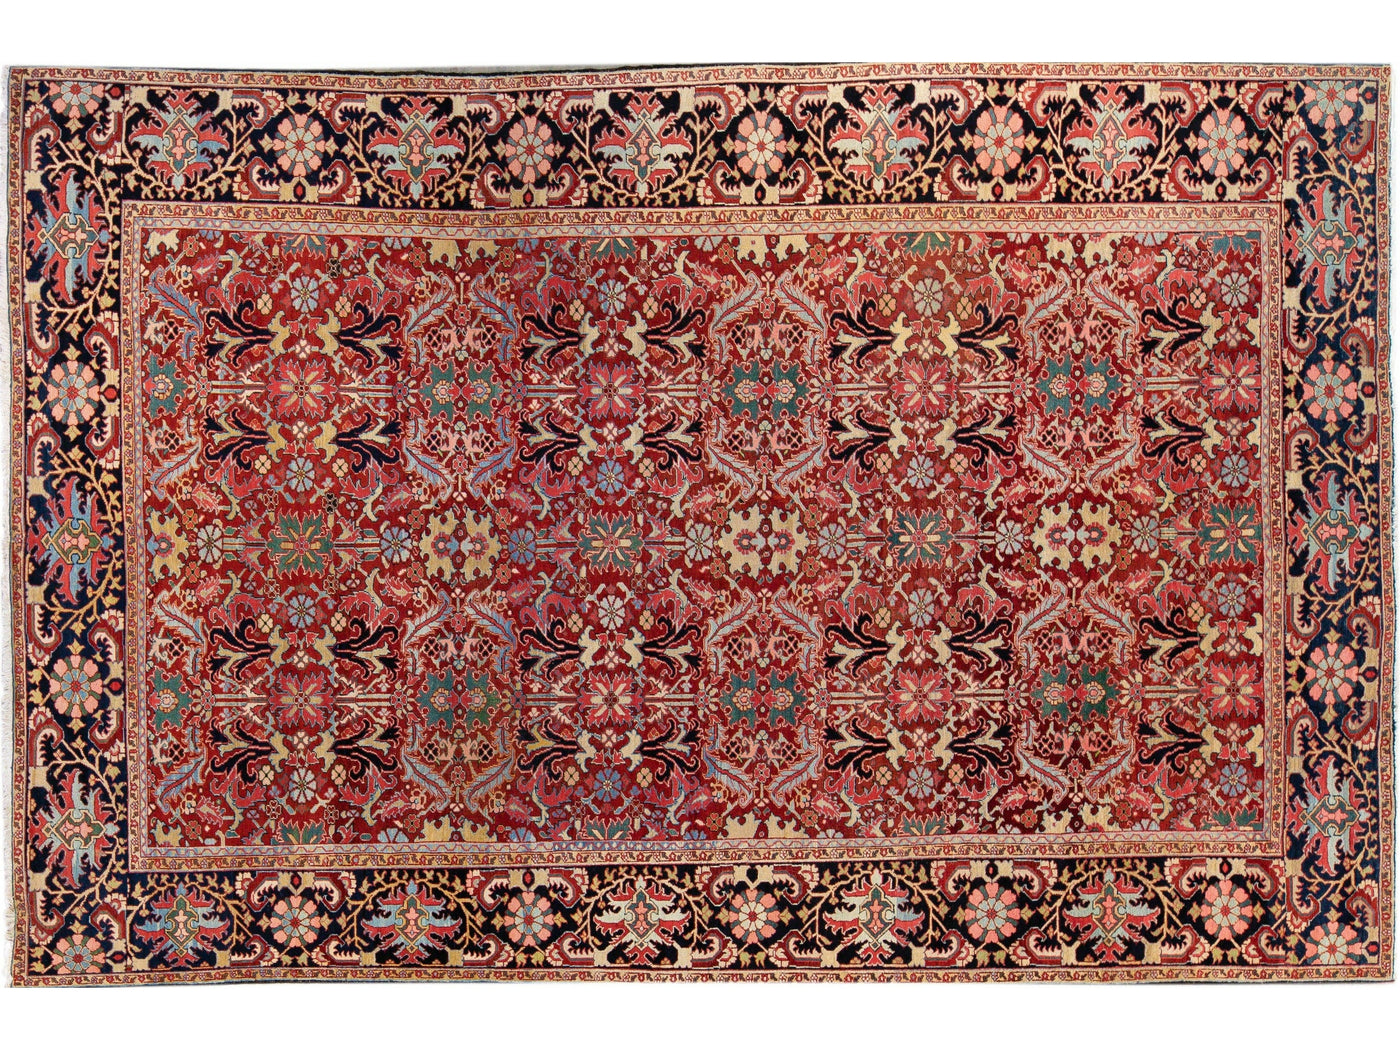 Antique Persian Heriz Handmade Multicolor Floral Designed Red Oversize Wool Rug